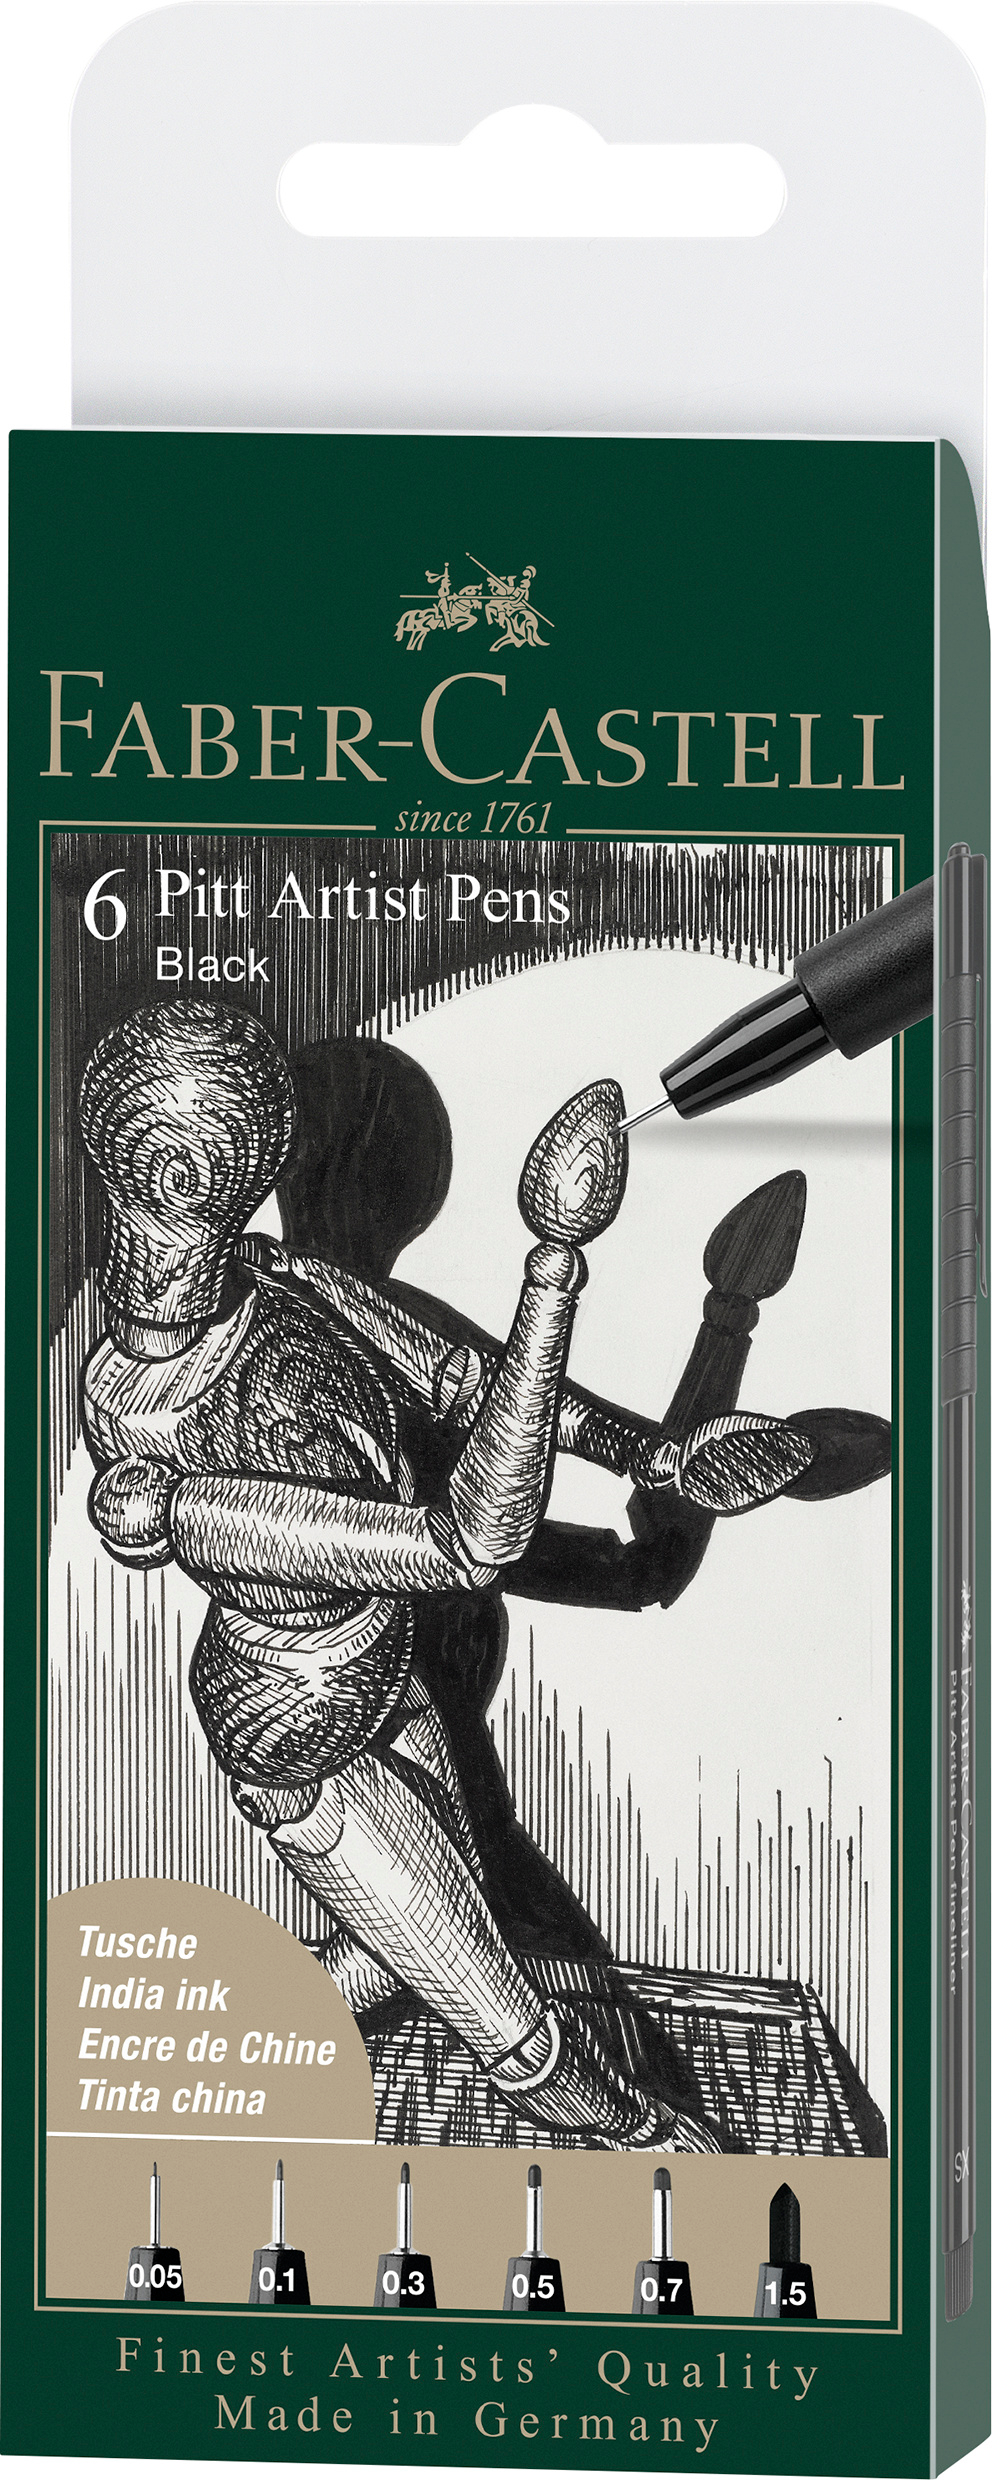 FABER-CASTELL Artist Pen Ink Pen 167154 noir 6 pcs.